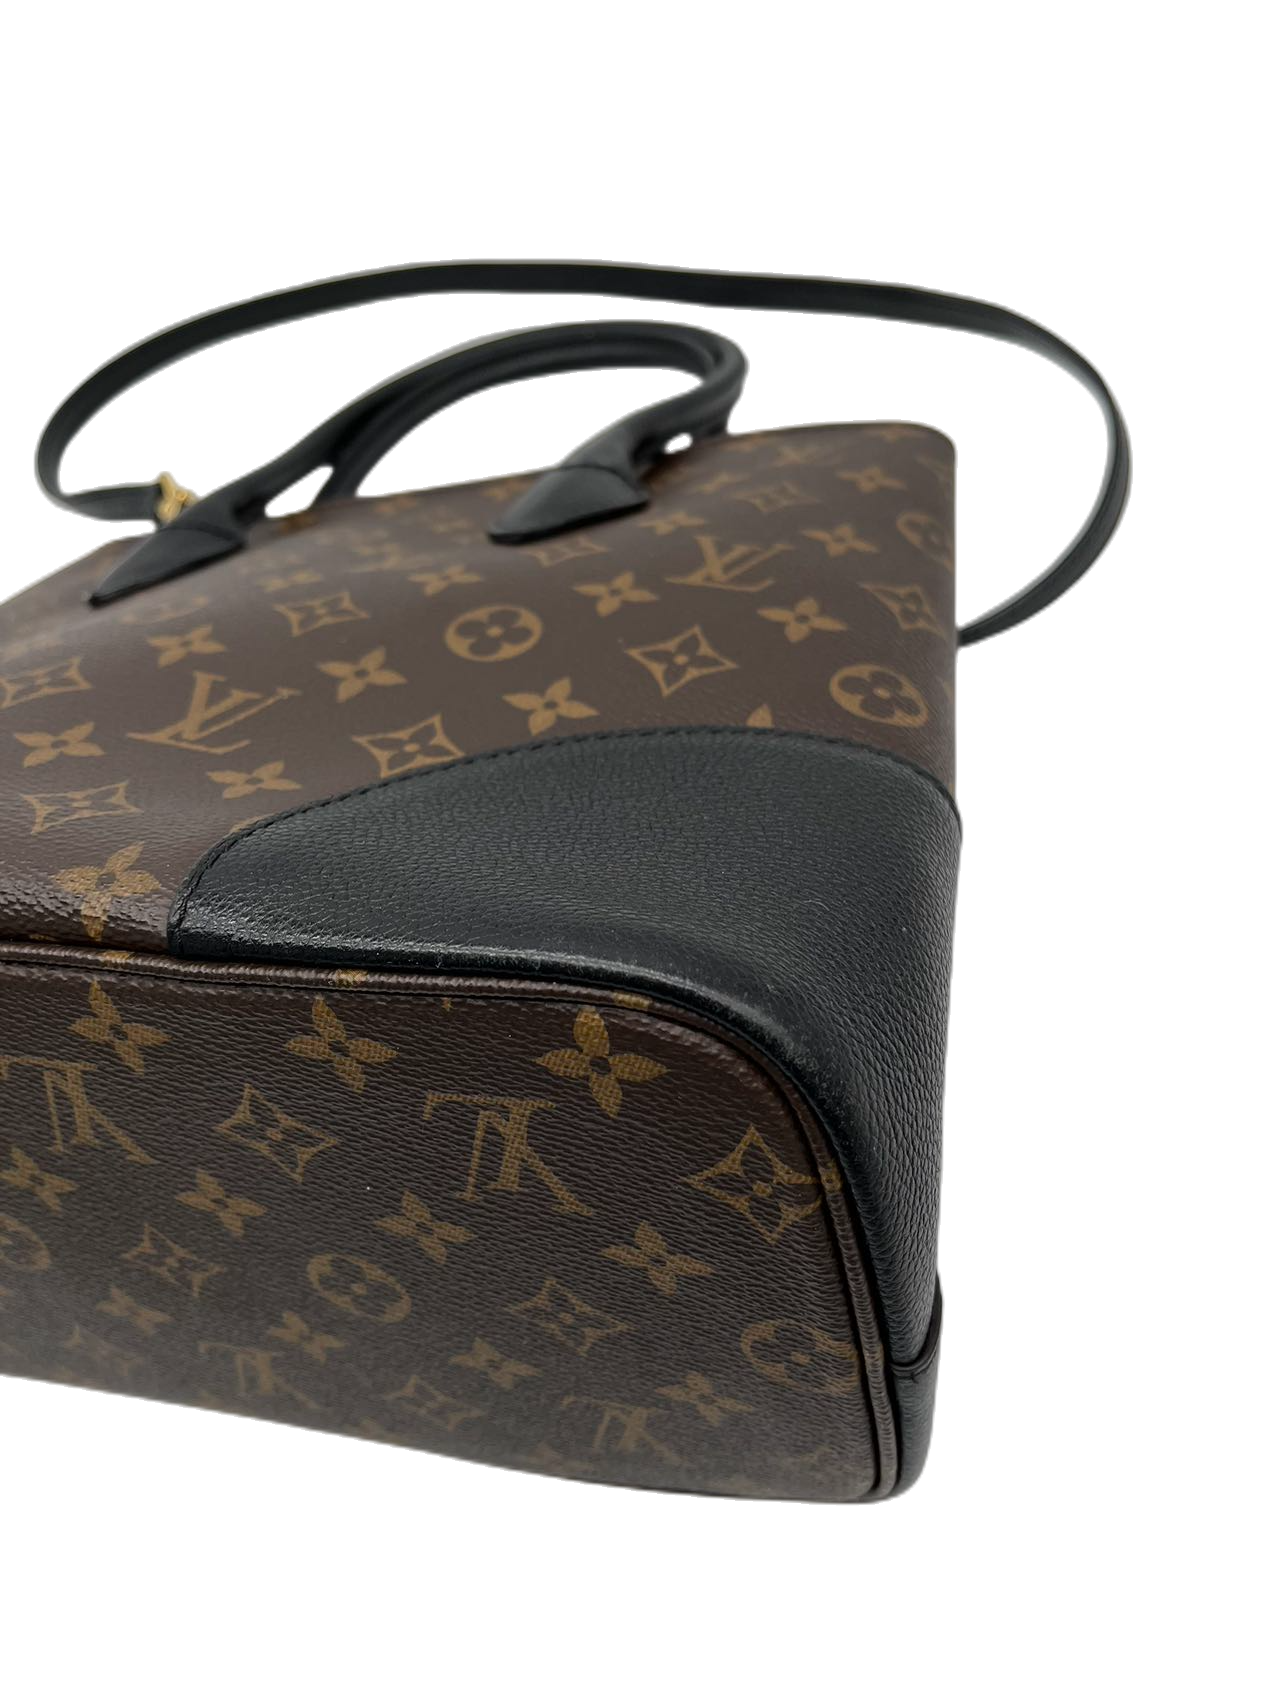 Preloved Louis Vuitton Monogram Canvas Flandrin Shoulder Bag